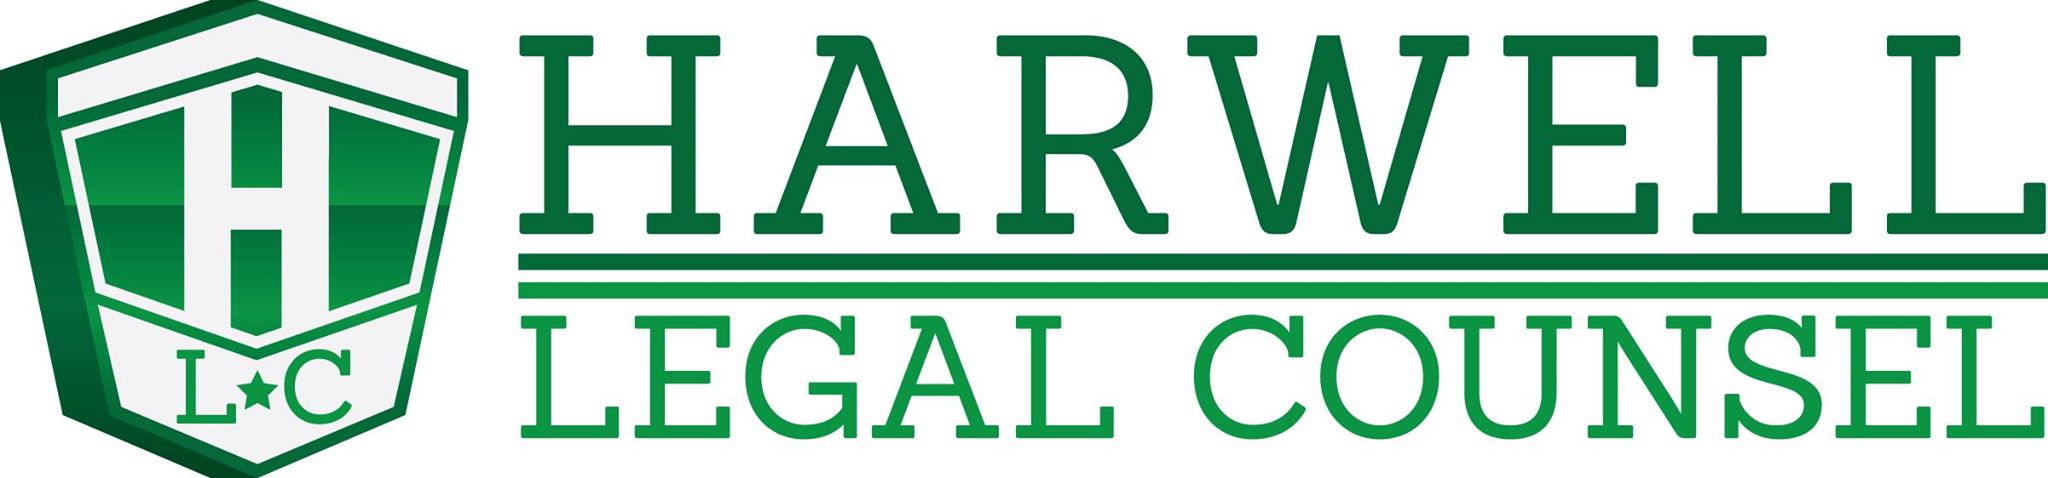 Harwell Legal